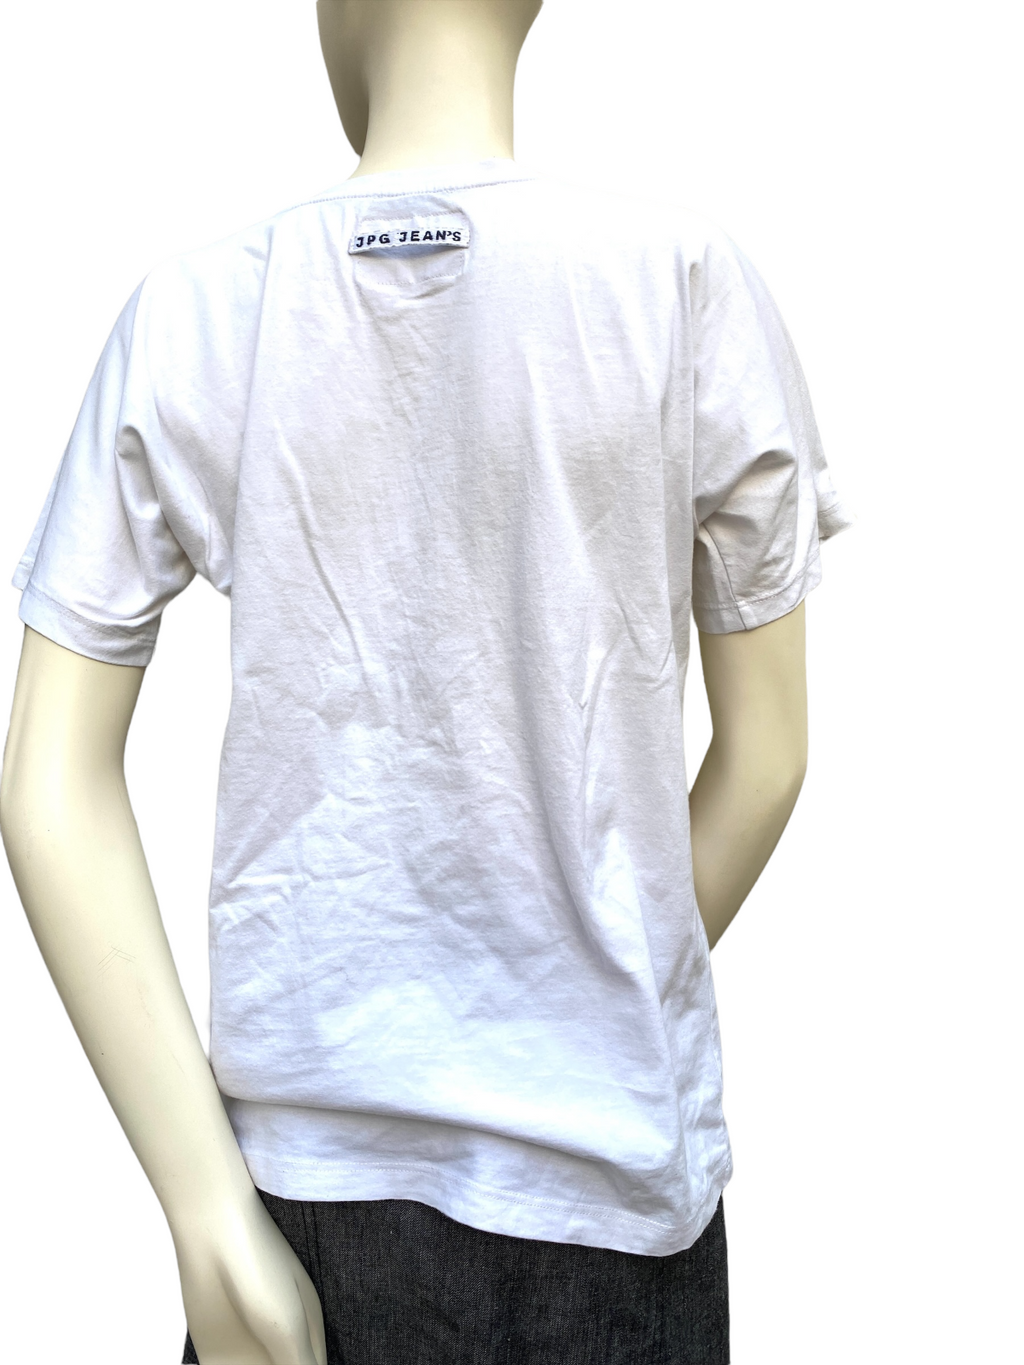 Vintage White t-shirt